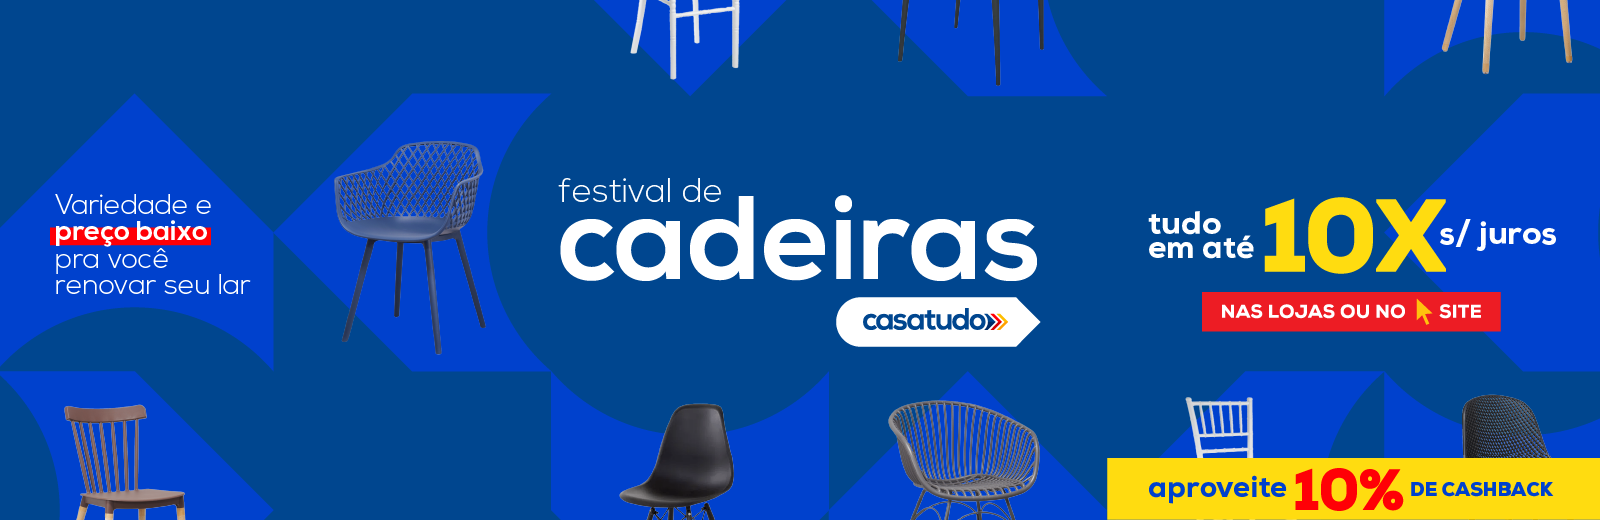 FESTIVAL DE CADEIRAS